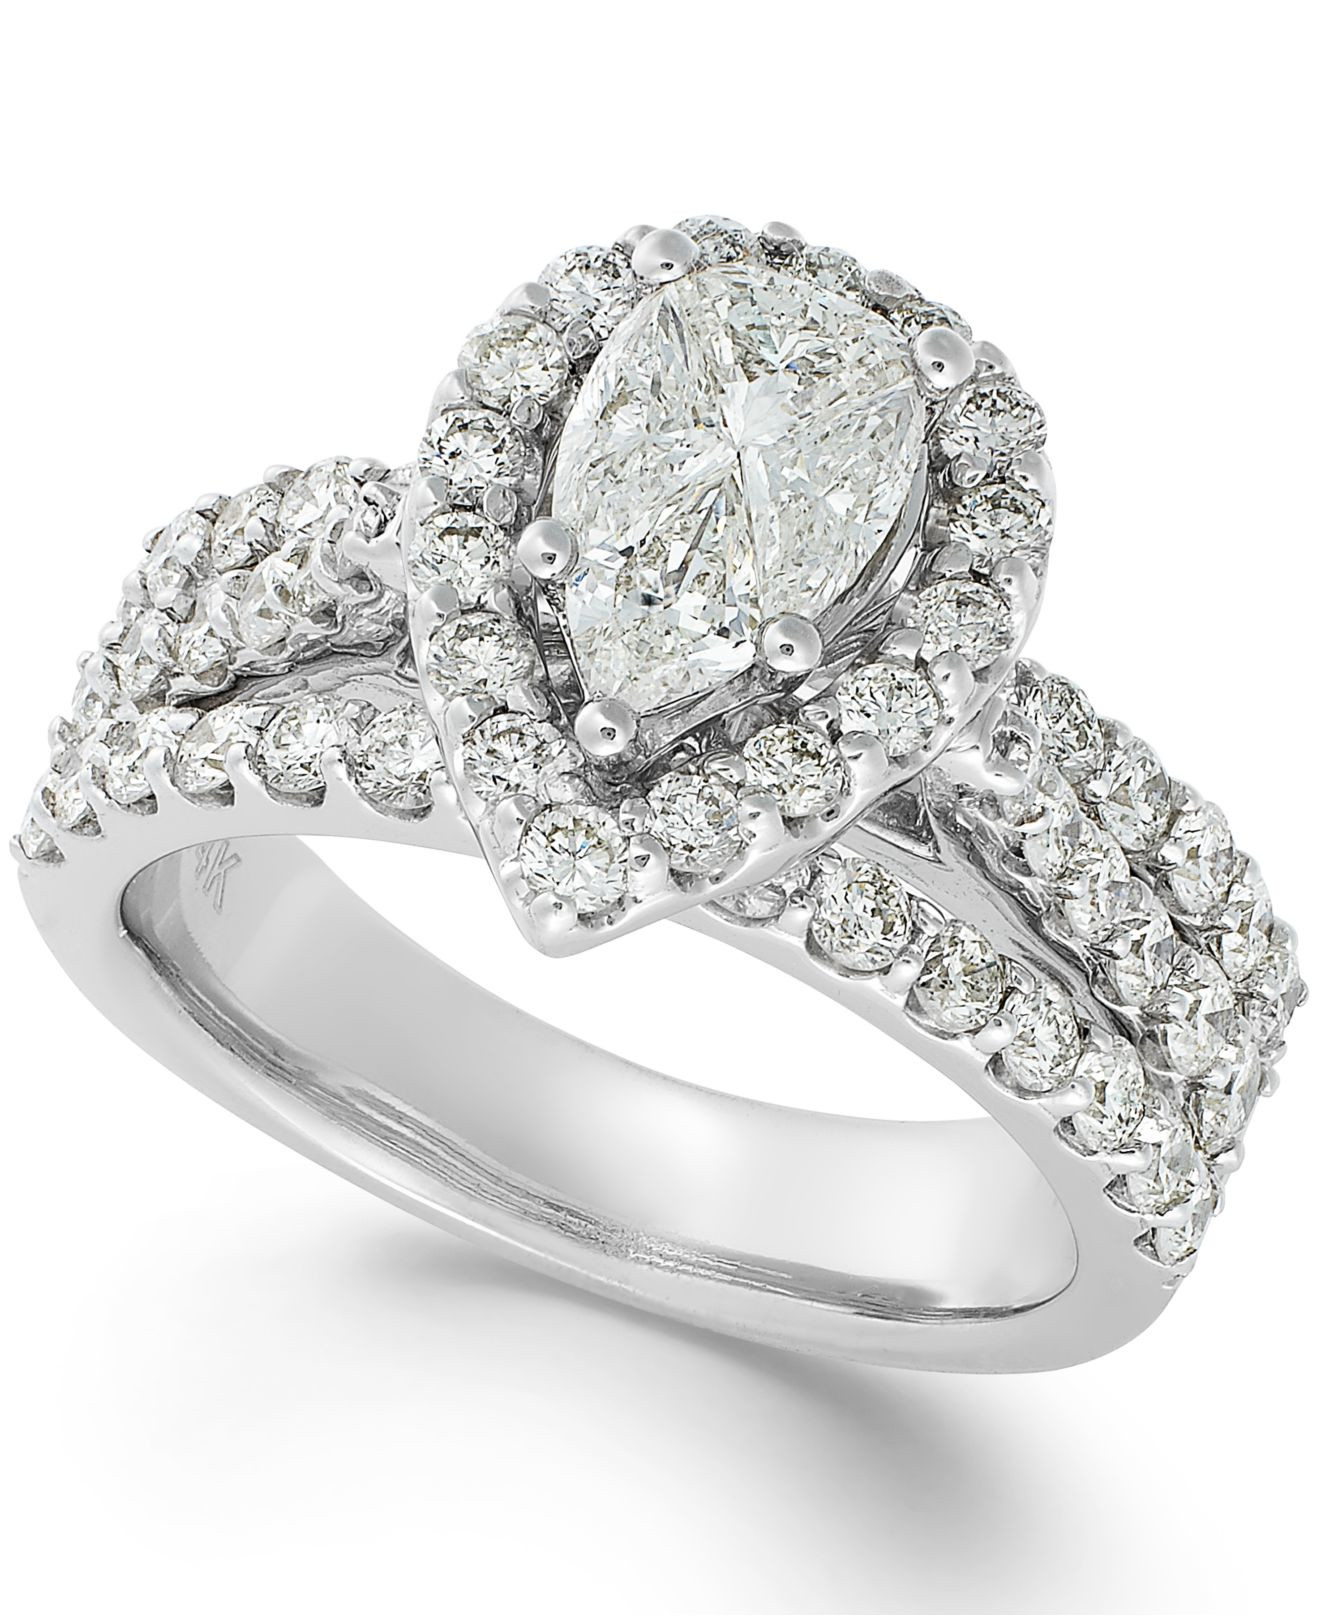 Macys Diamond Rings
 Lyst Macy S Diamond Engagement Ring In 14k White Gold 2